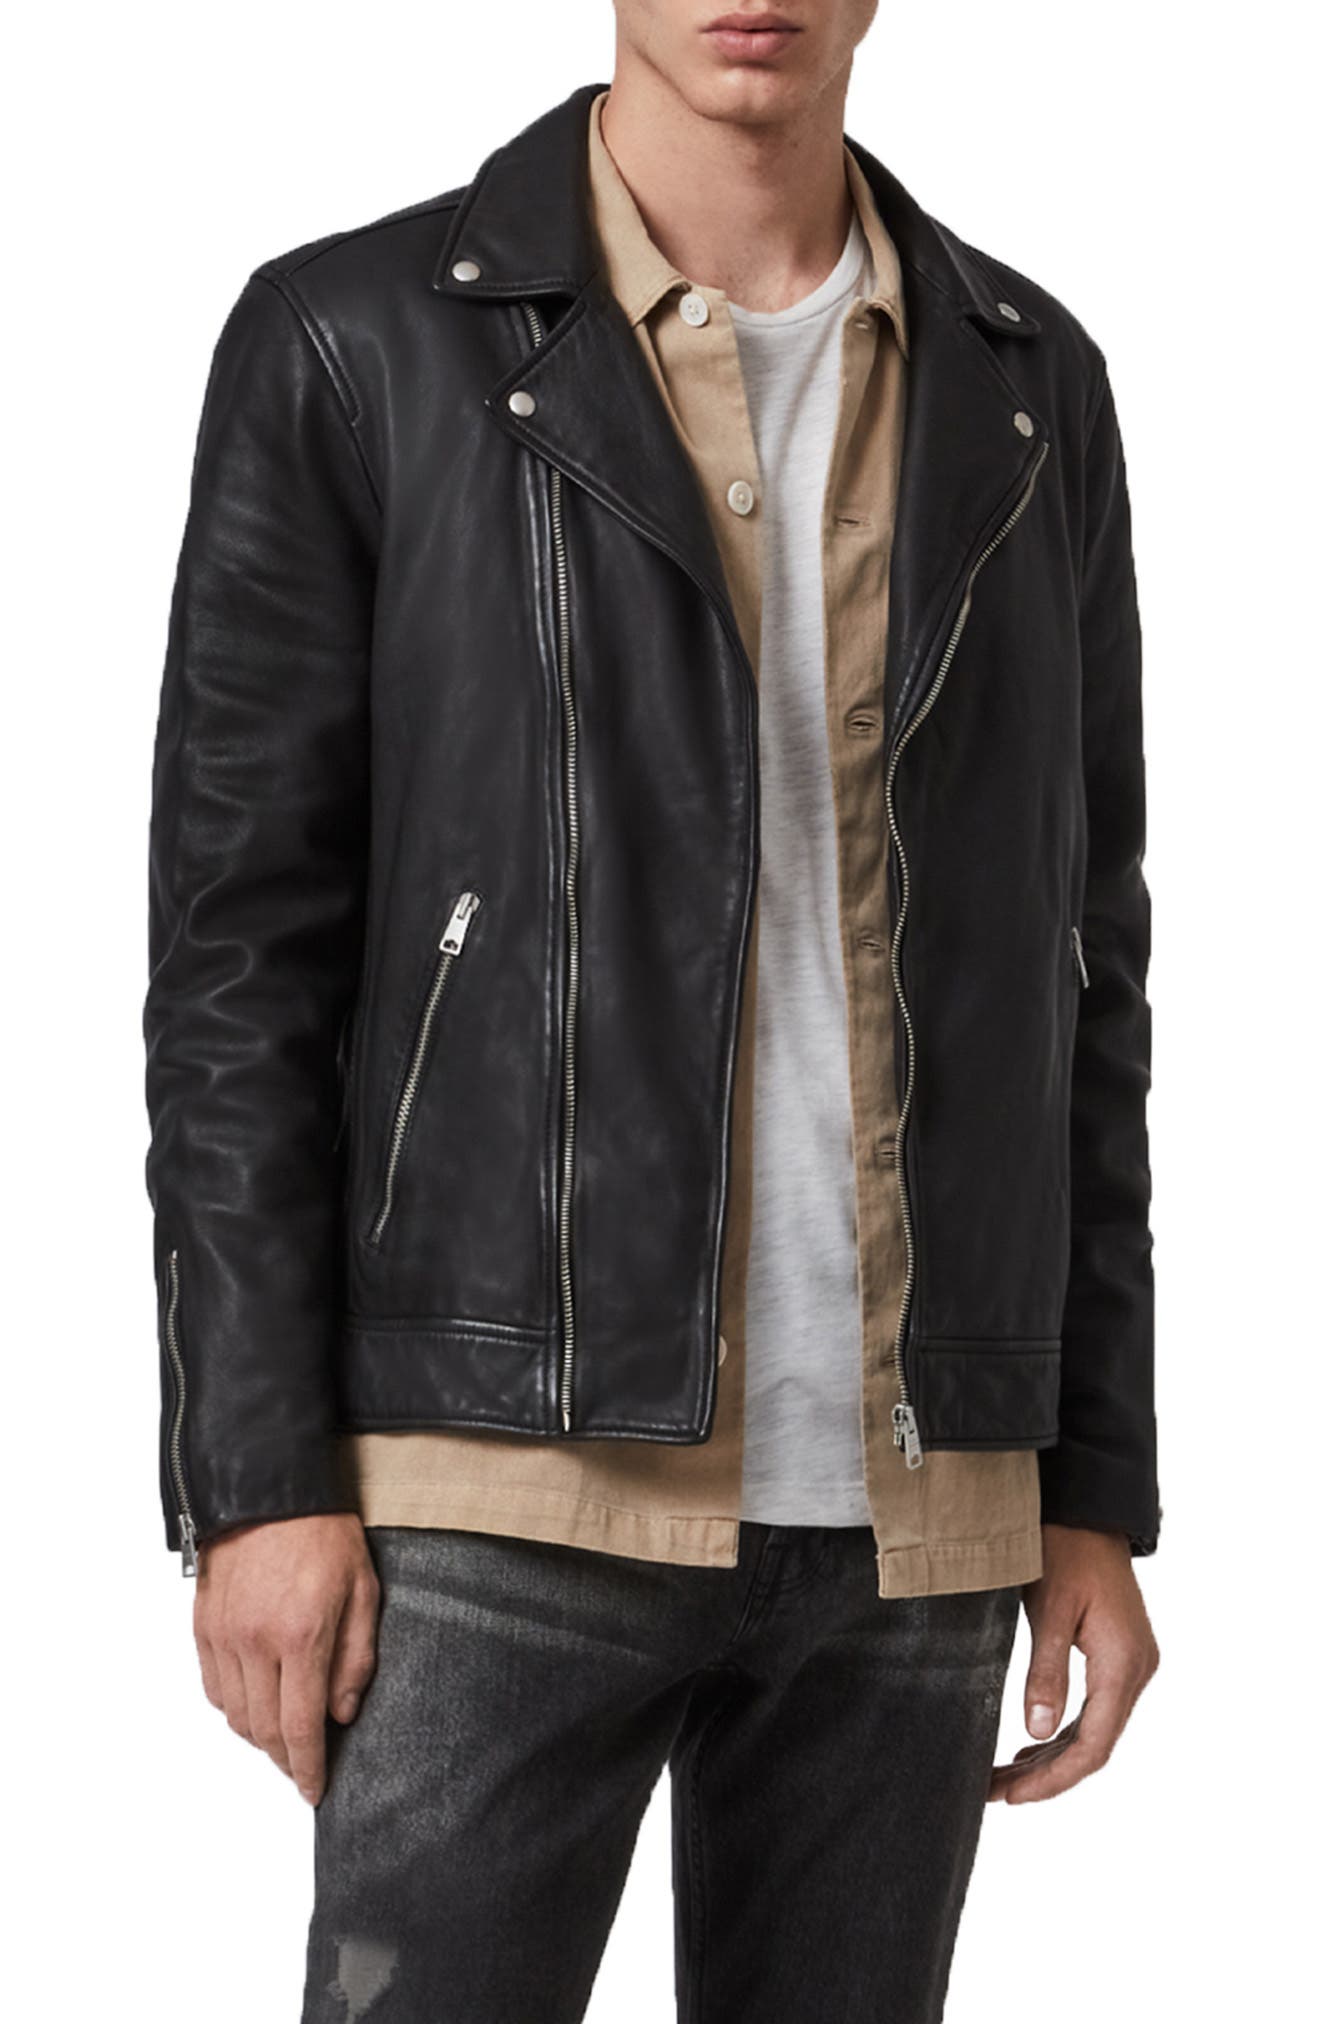 adidas leather jacket price